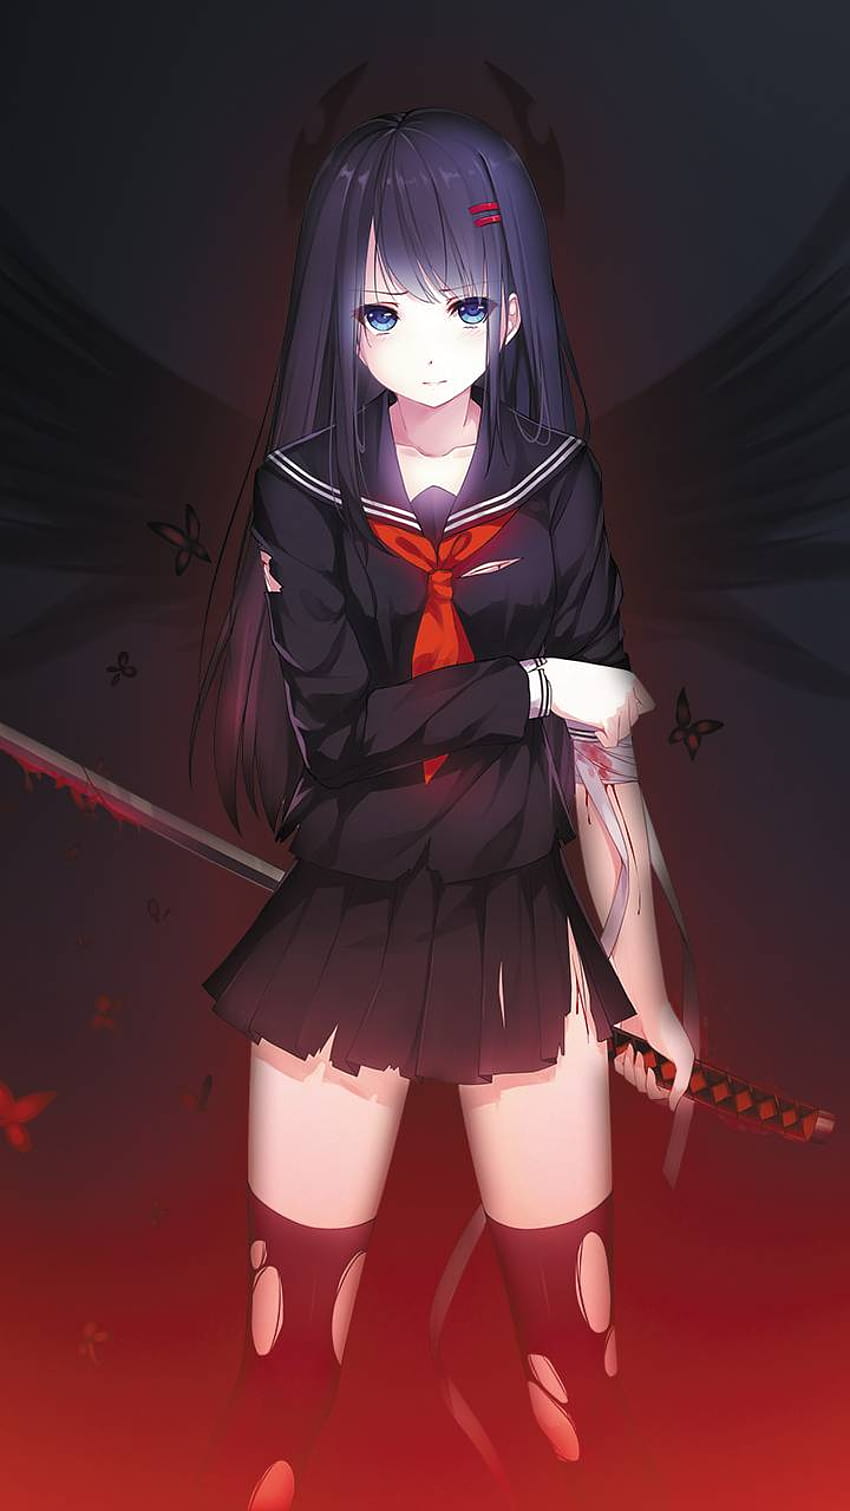 Bad Girl - Other & Anime Background Wallpapers on Desktop Nexus (Image  2254177)